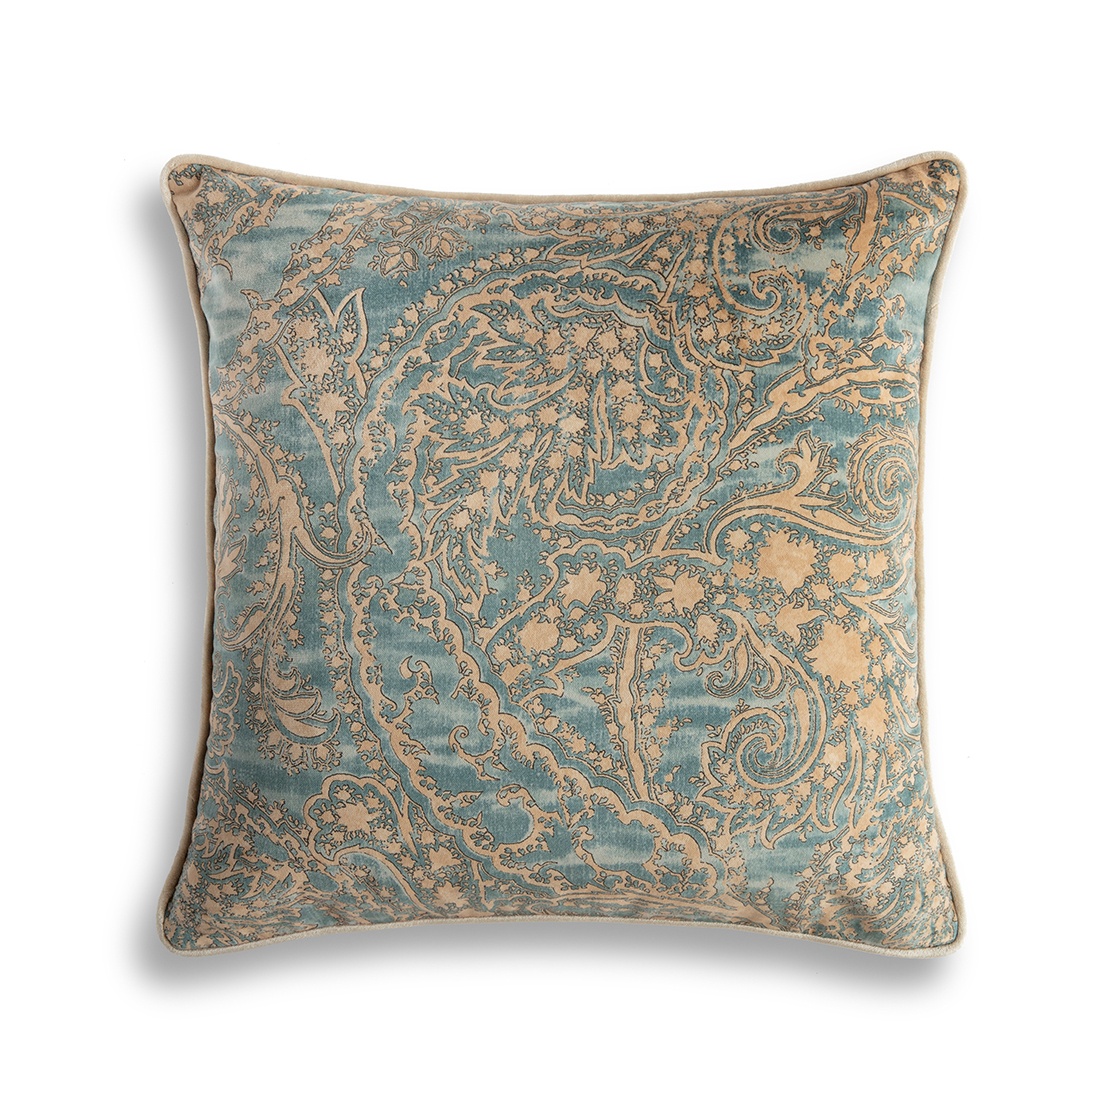 Balthazar classic cushion - Azure and Como - teal - Beaumont & Fletcher